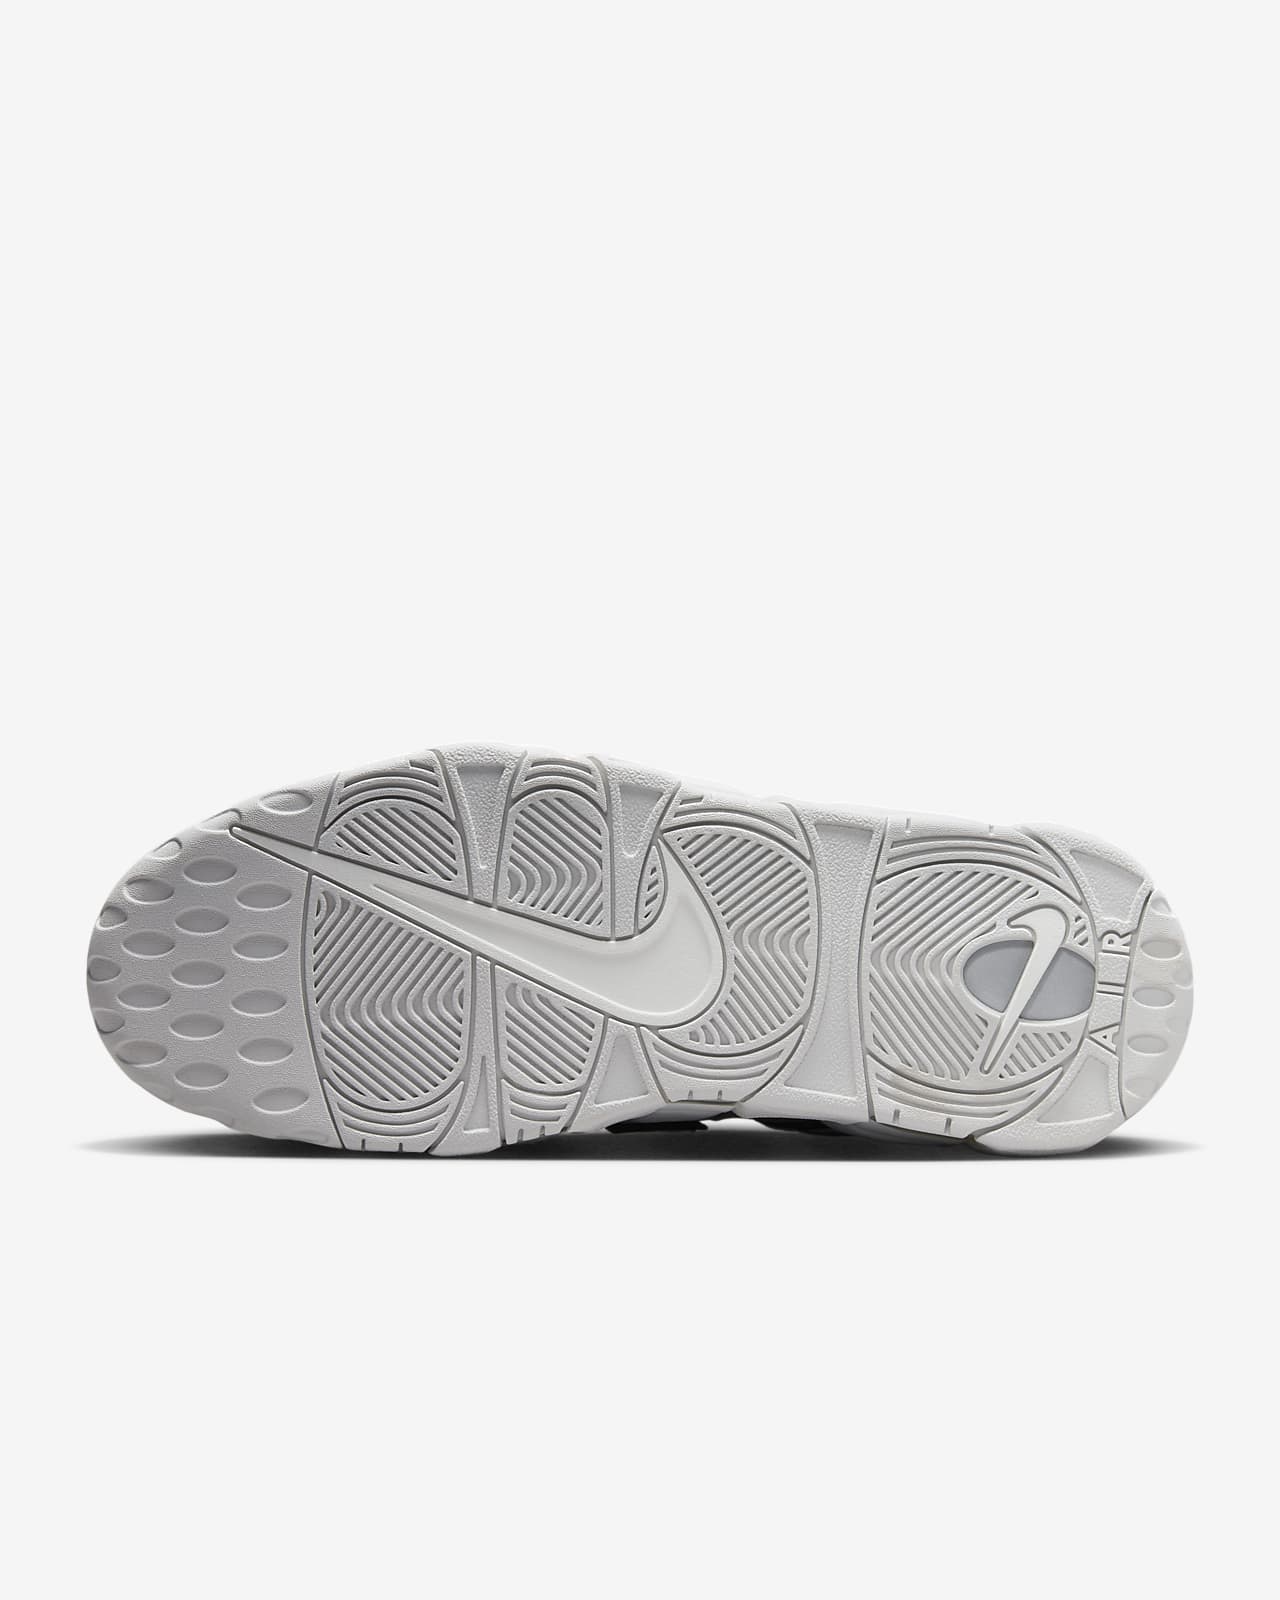 Nike Air More Uptempo 96 Basketball Shoes